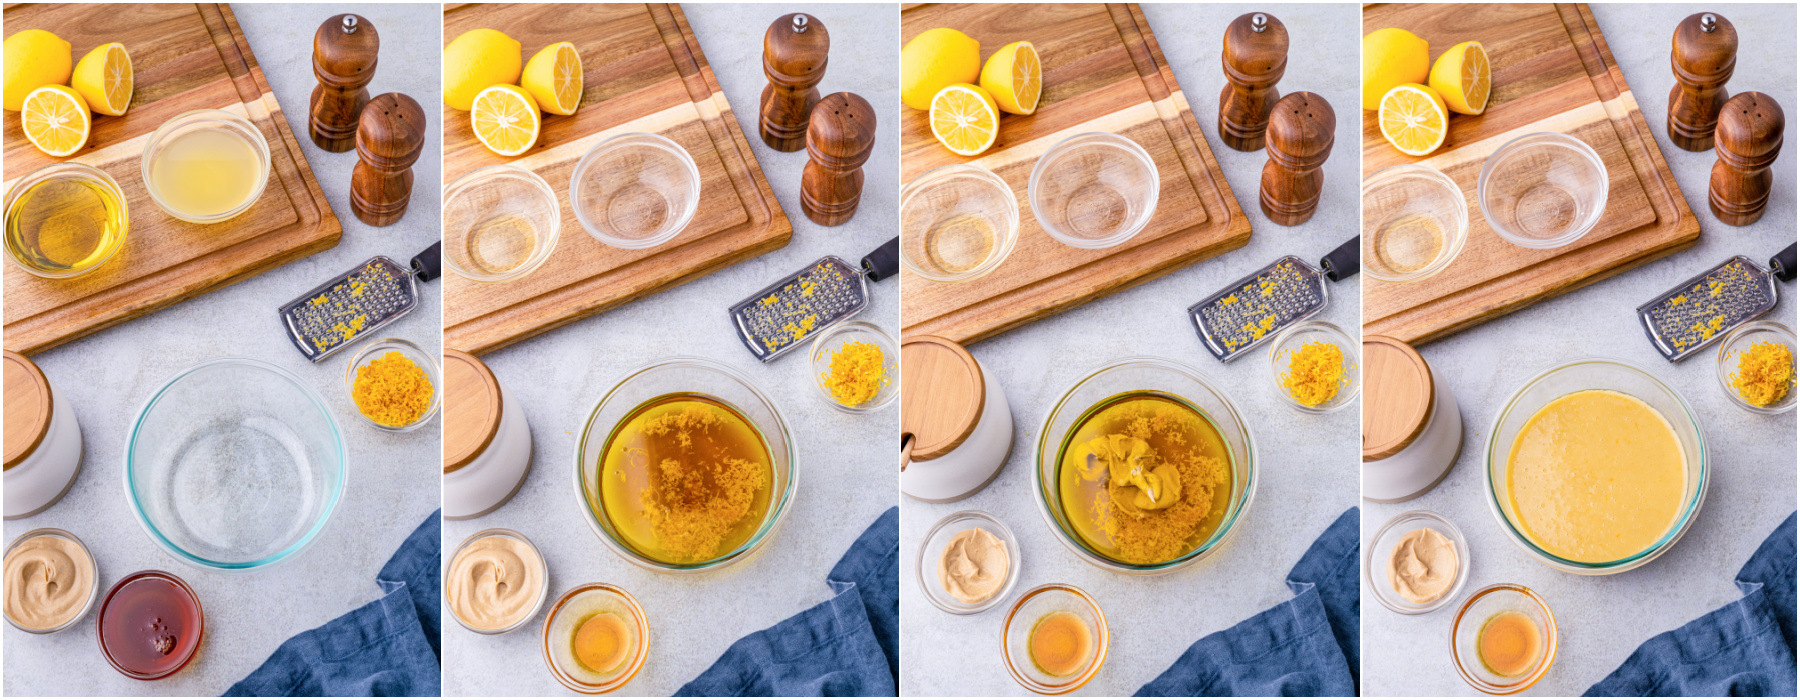 A series of process images showing how to make a lemon vinaigrette.